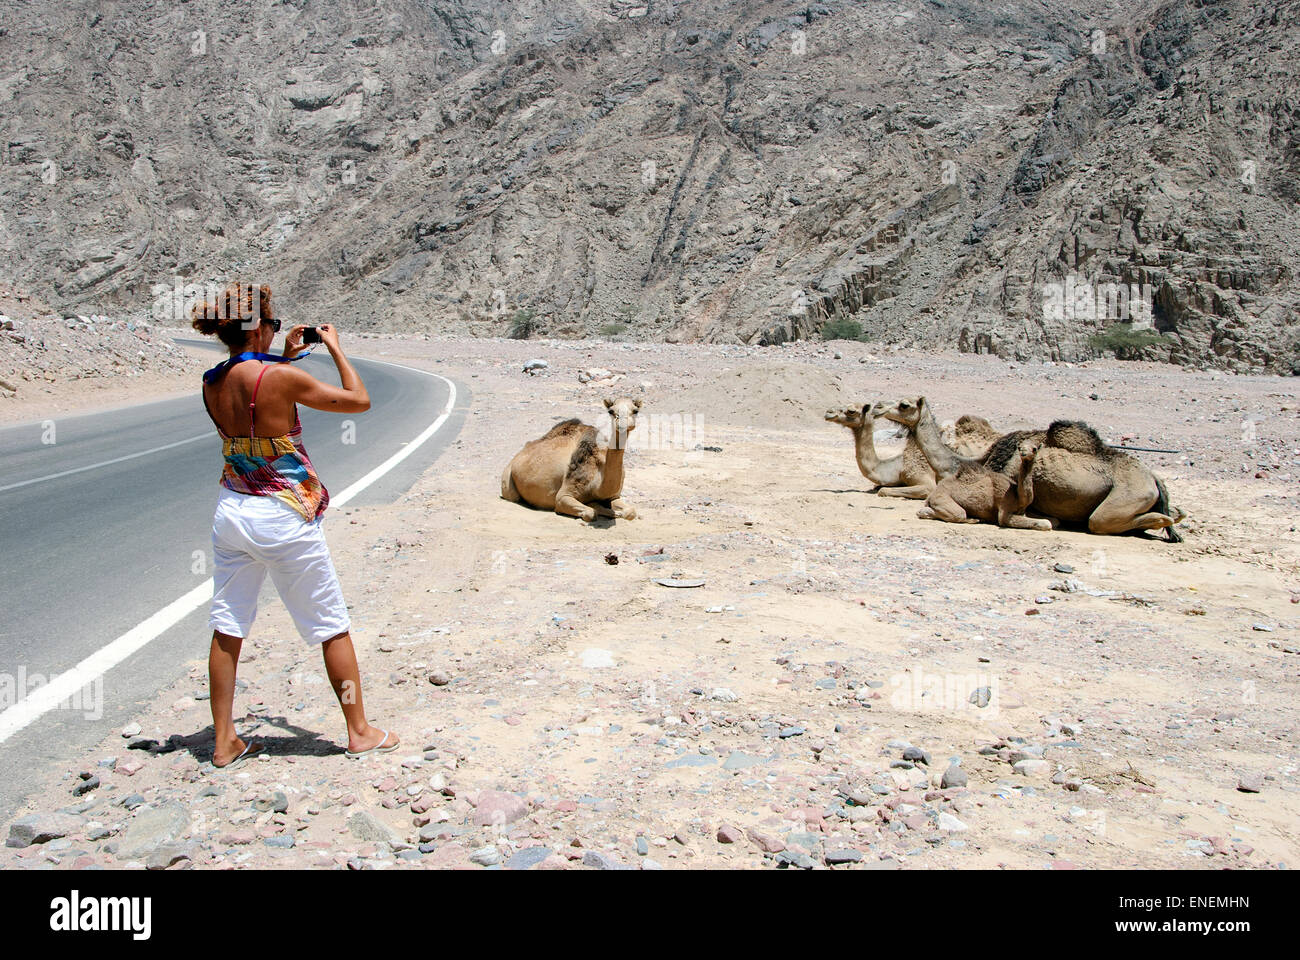 Tourist woman taking a photo of camels - sinai Peninsula, Egypt Stock Photo